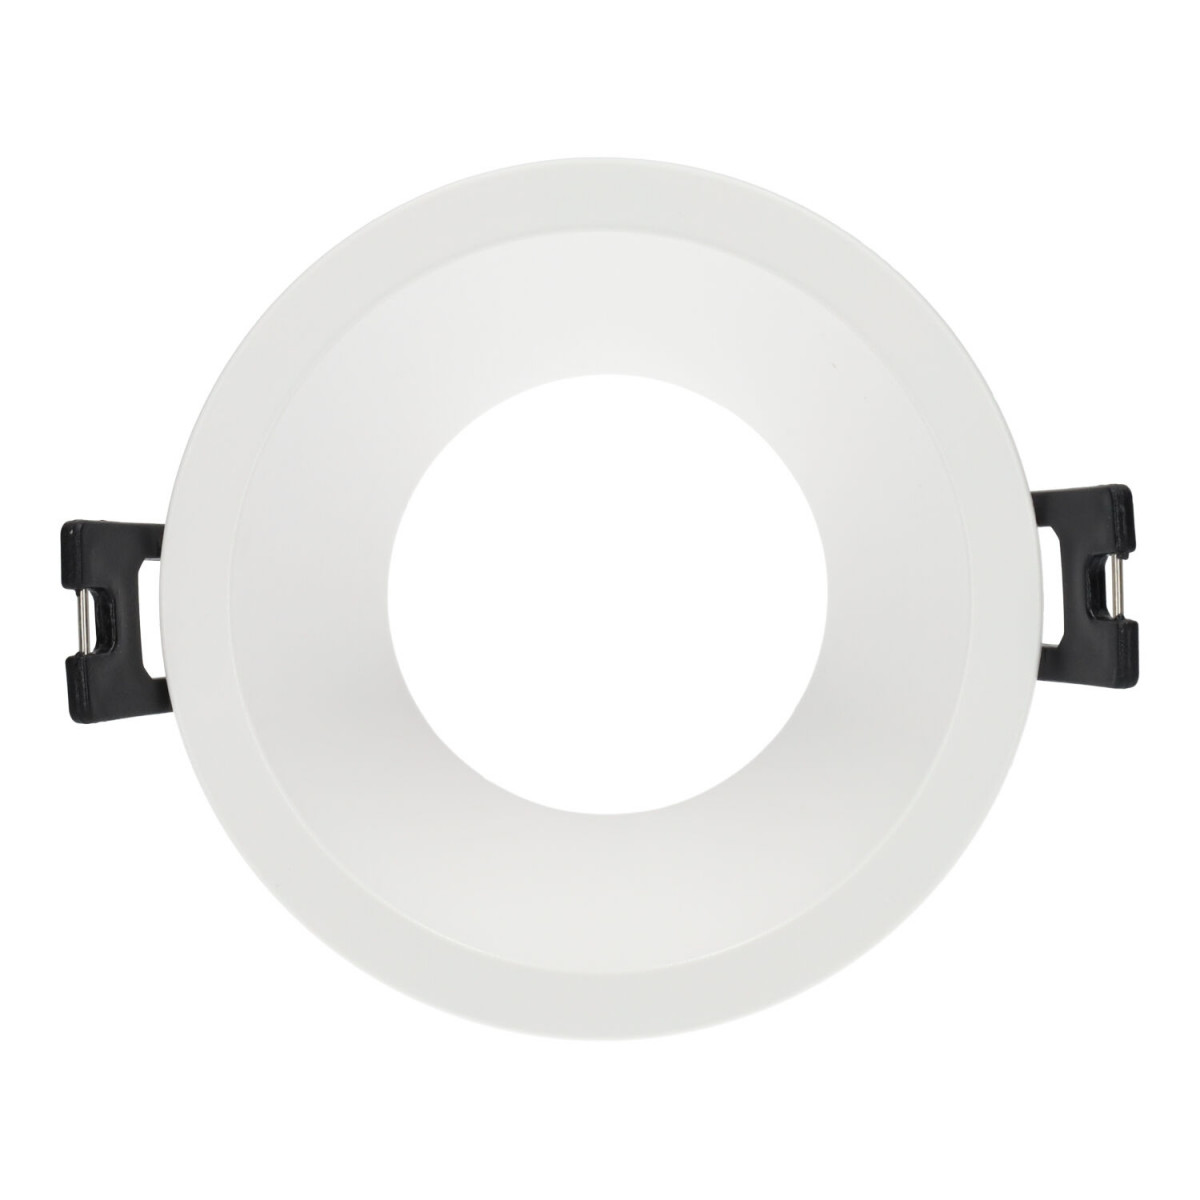 Kompakte runde Basis für Dikroiklampe PC-Serie